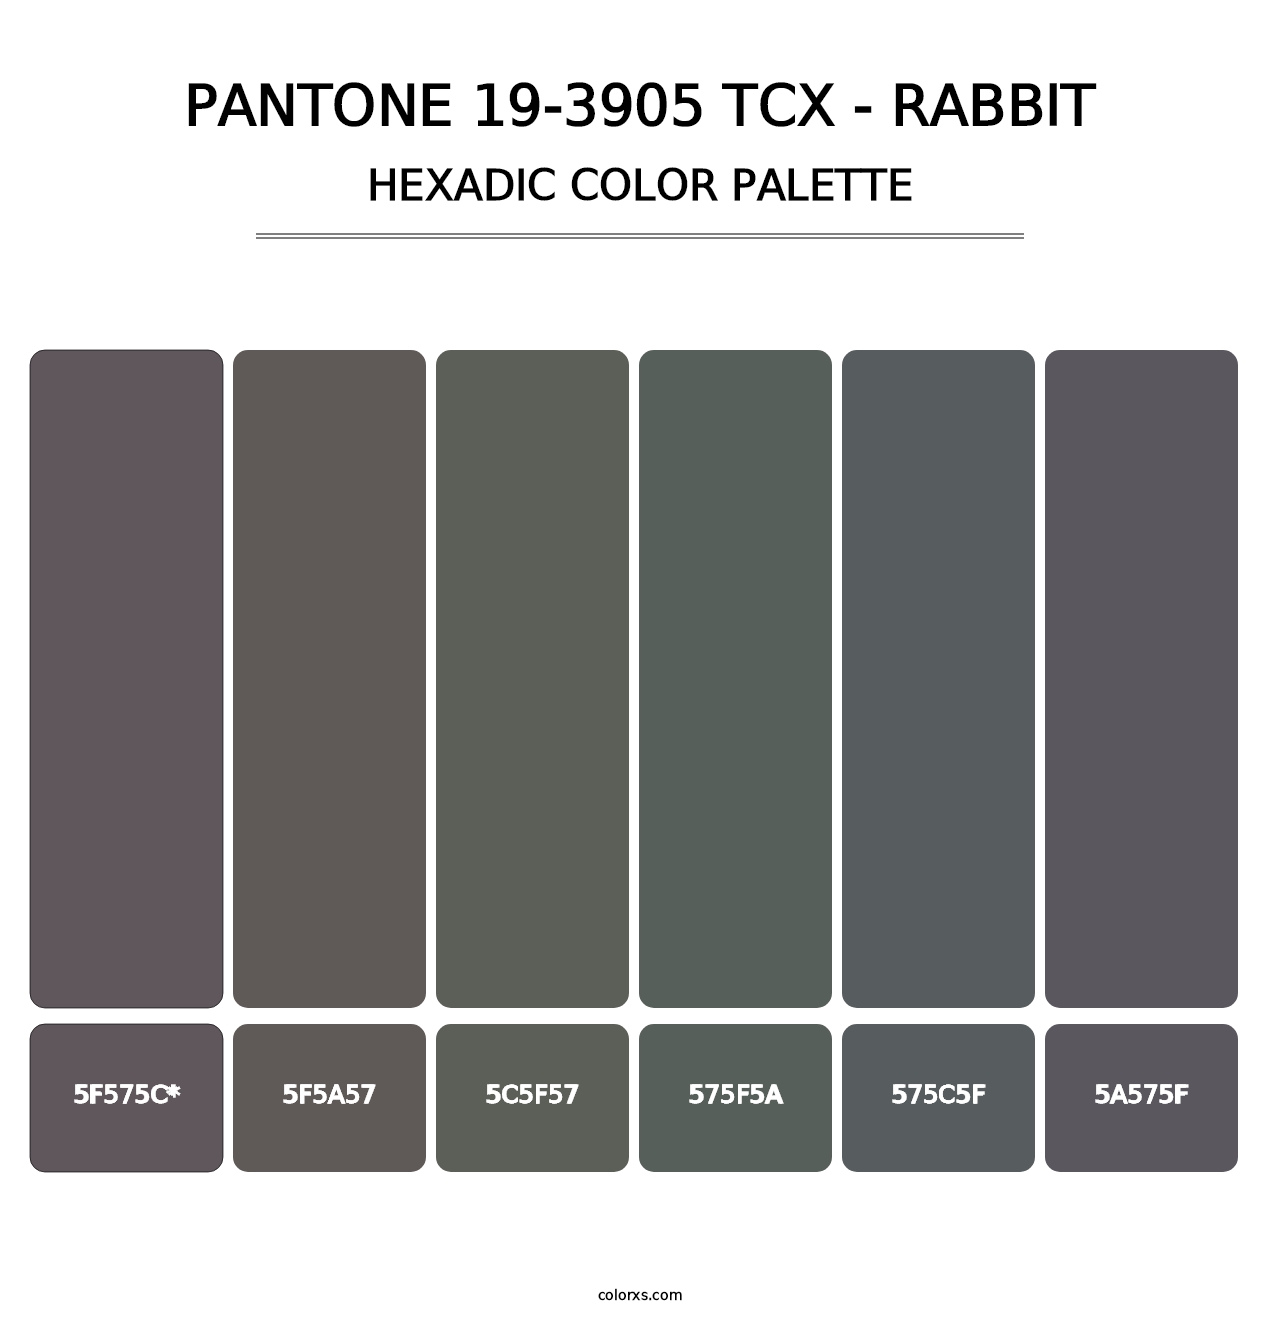 PANTONE 19-3905 TCX - Rabbit - Hexadic Color Palette